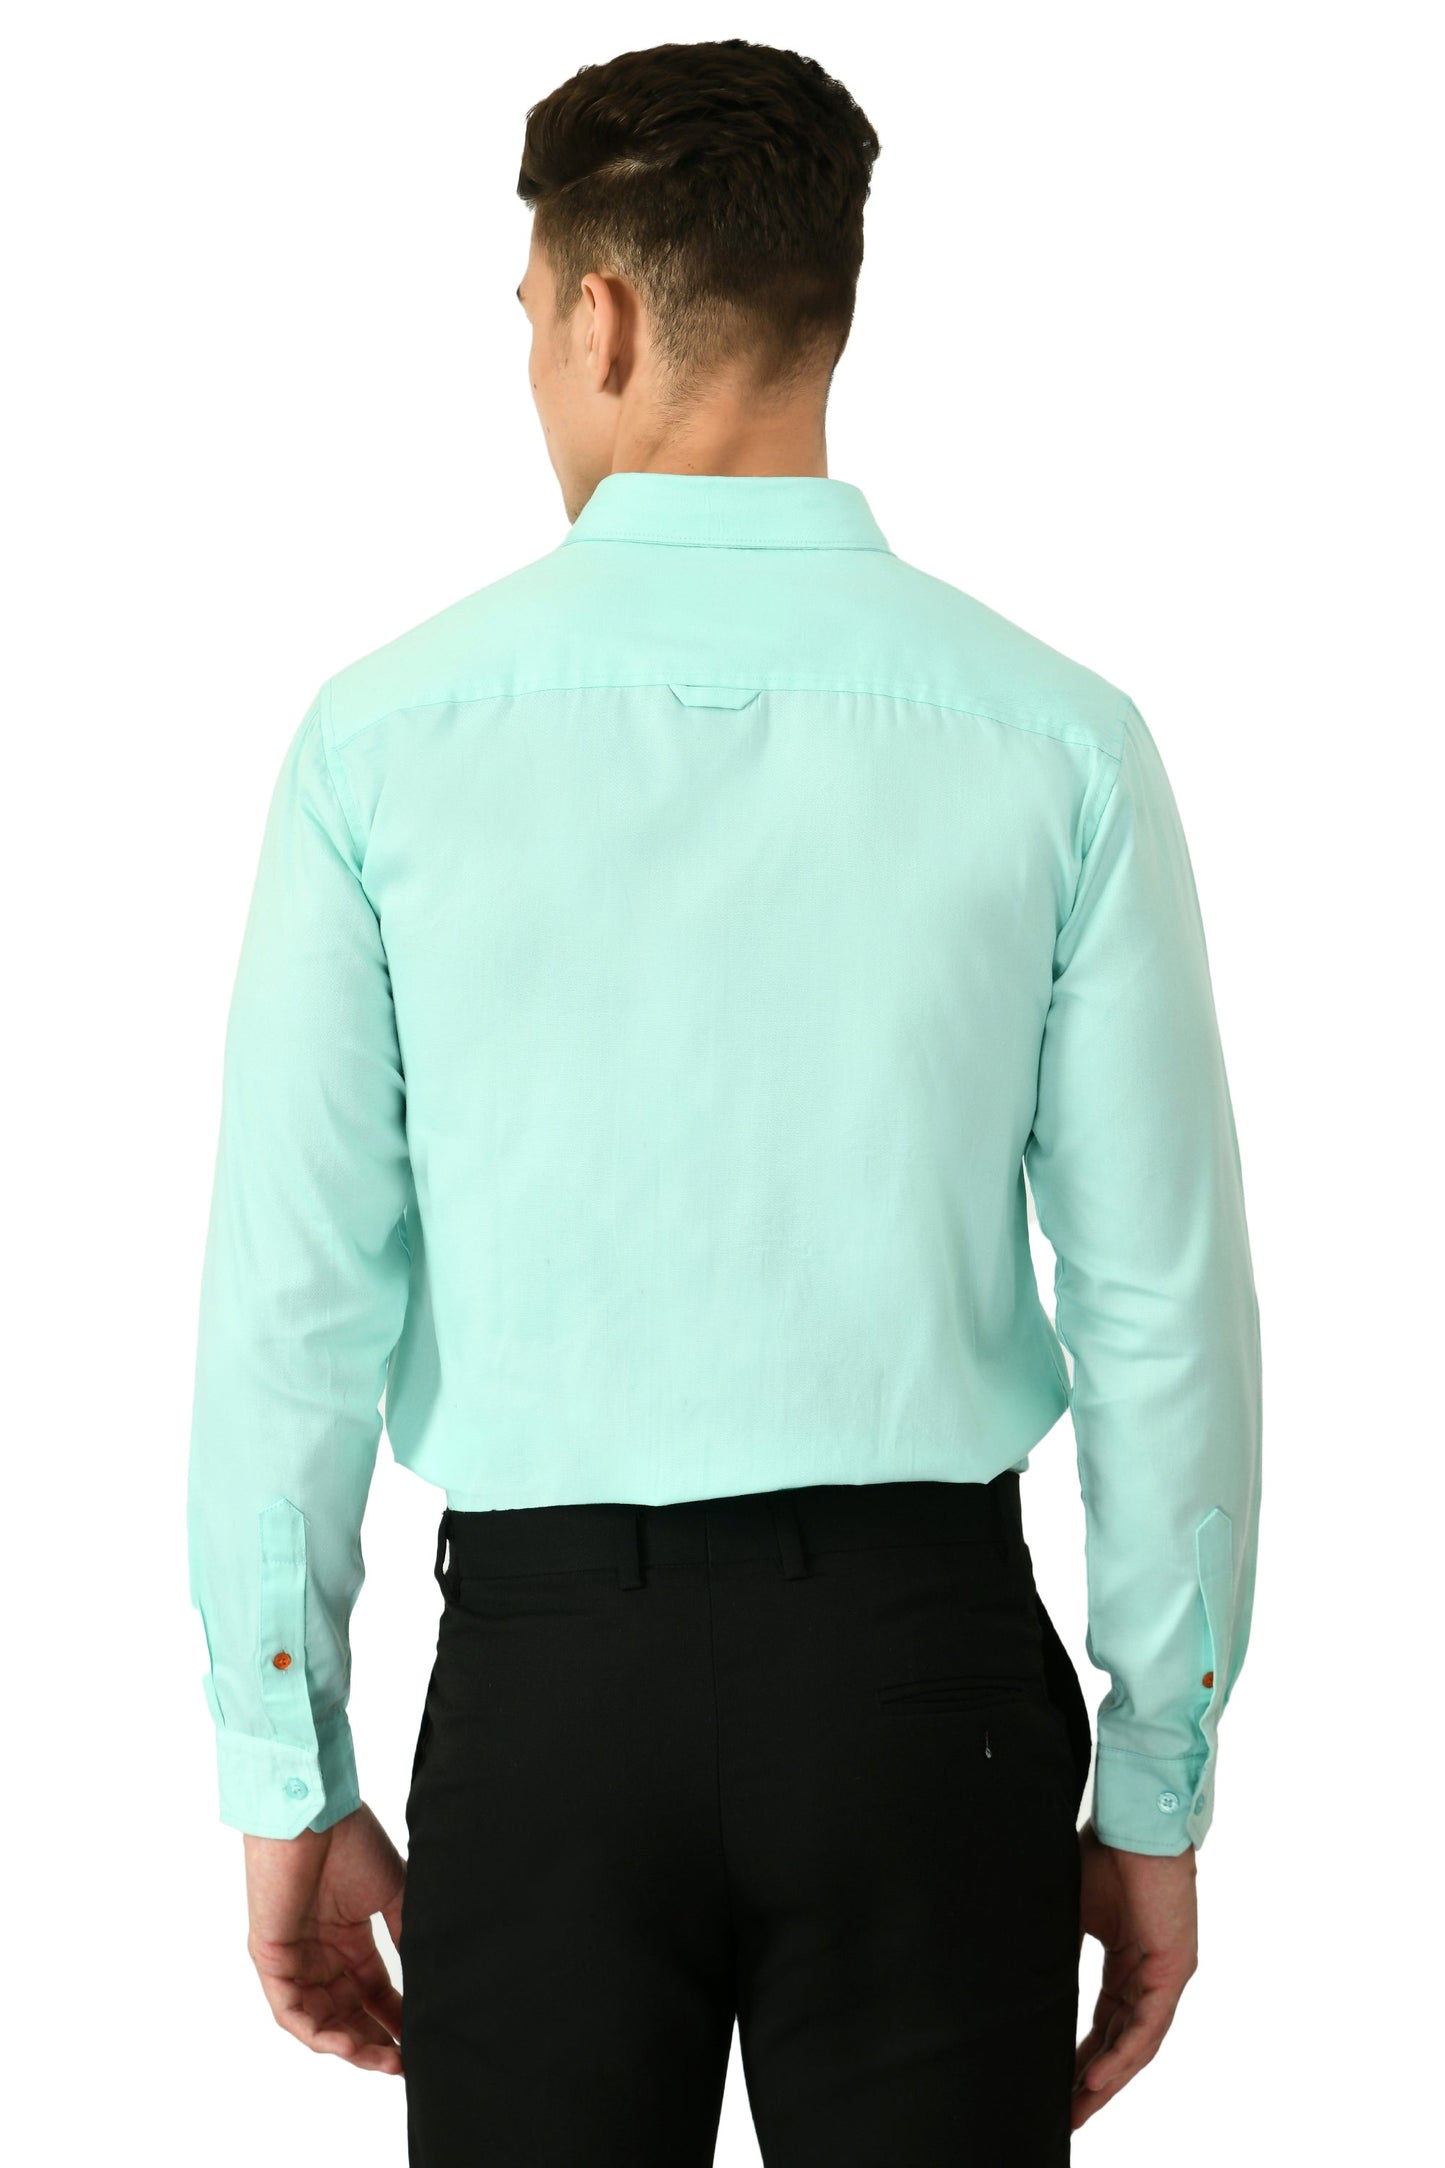 Full Sleeve Cotton Spread Collar Men's Shirt - Aqua Blue